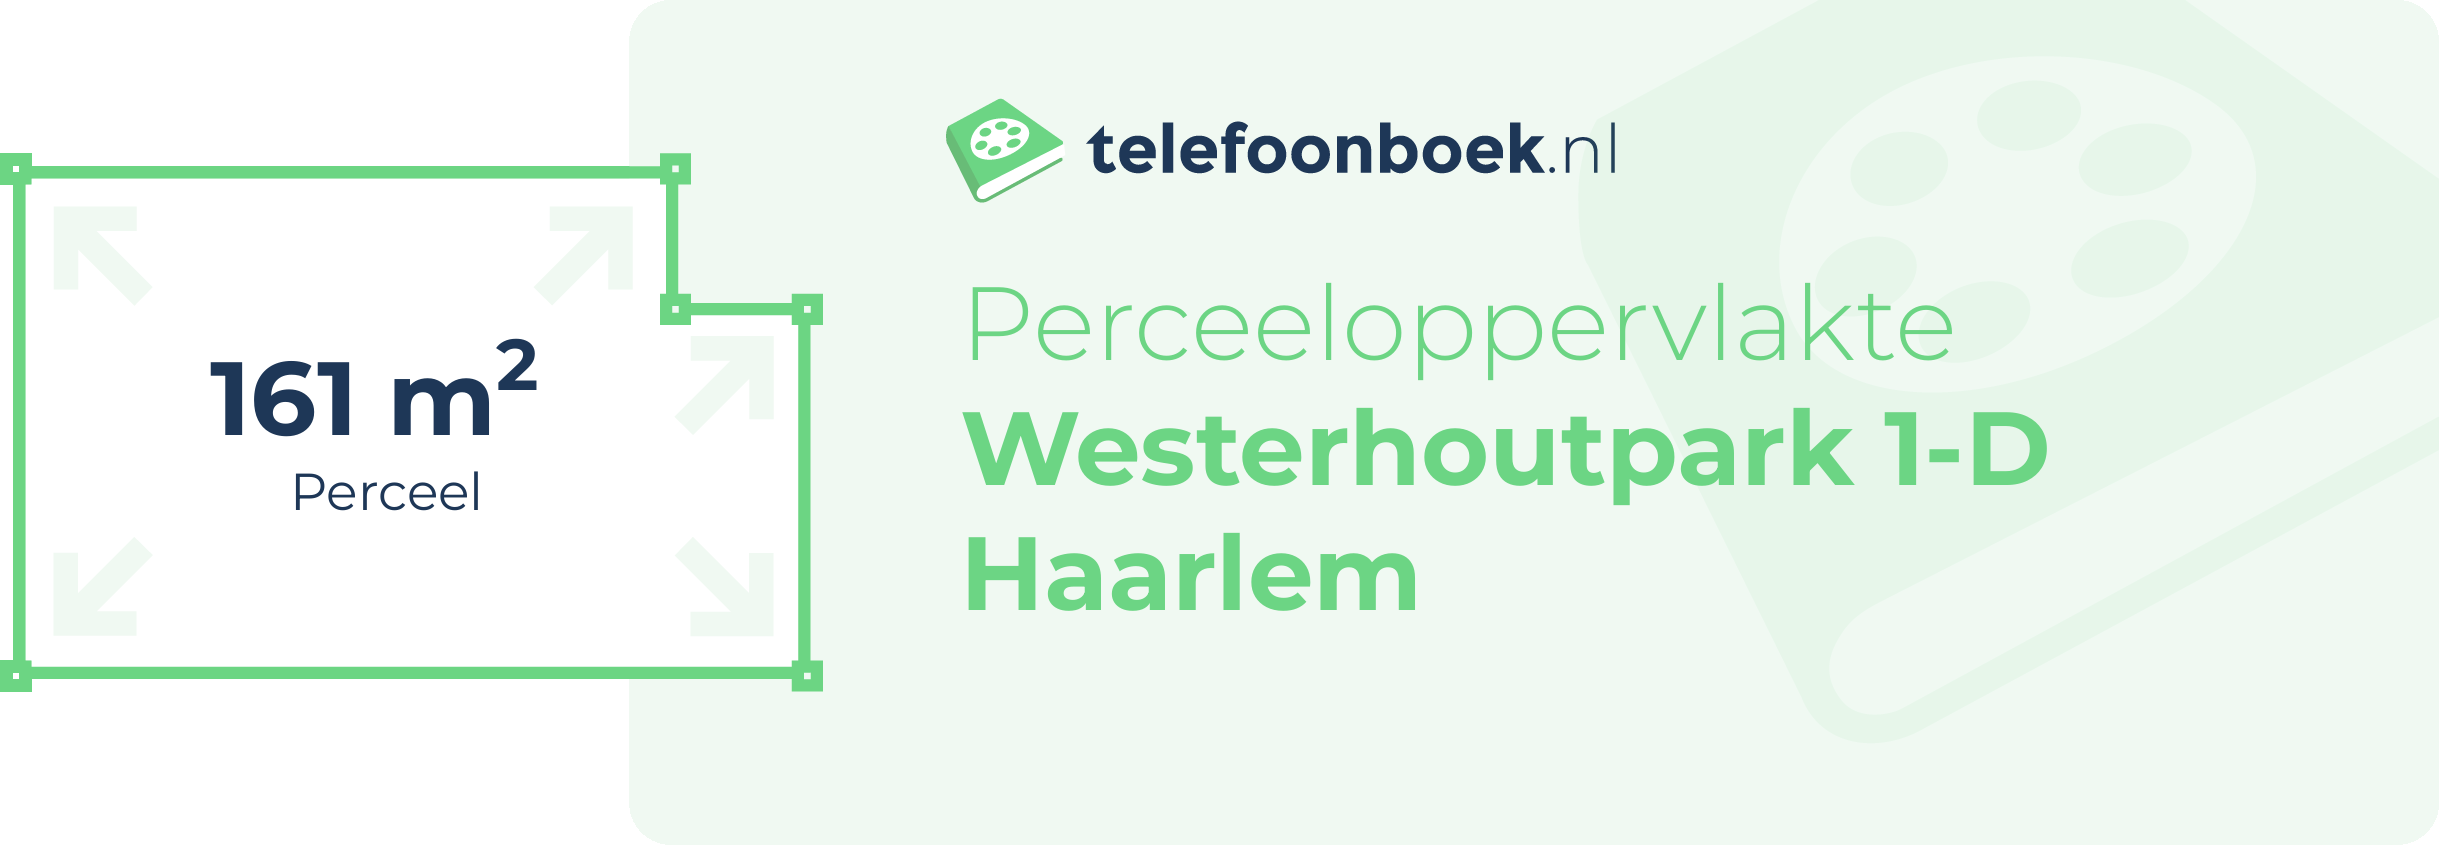 Perceeloppervlakte Westerhoutpark 1-D Haarlem